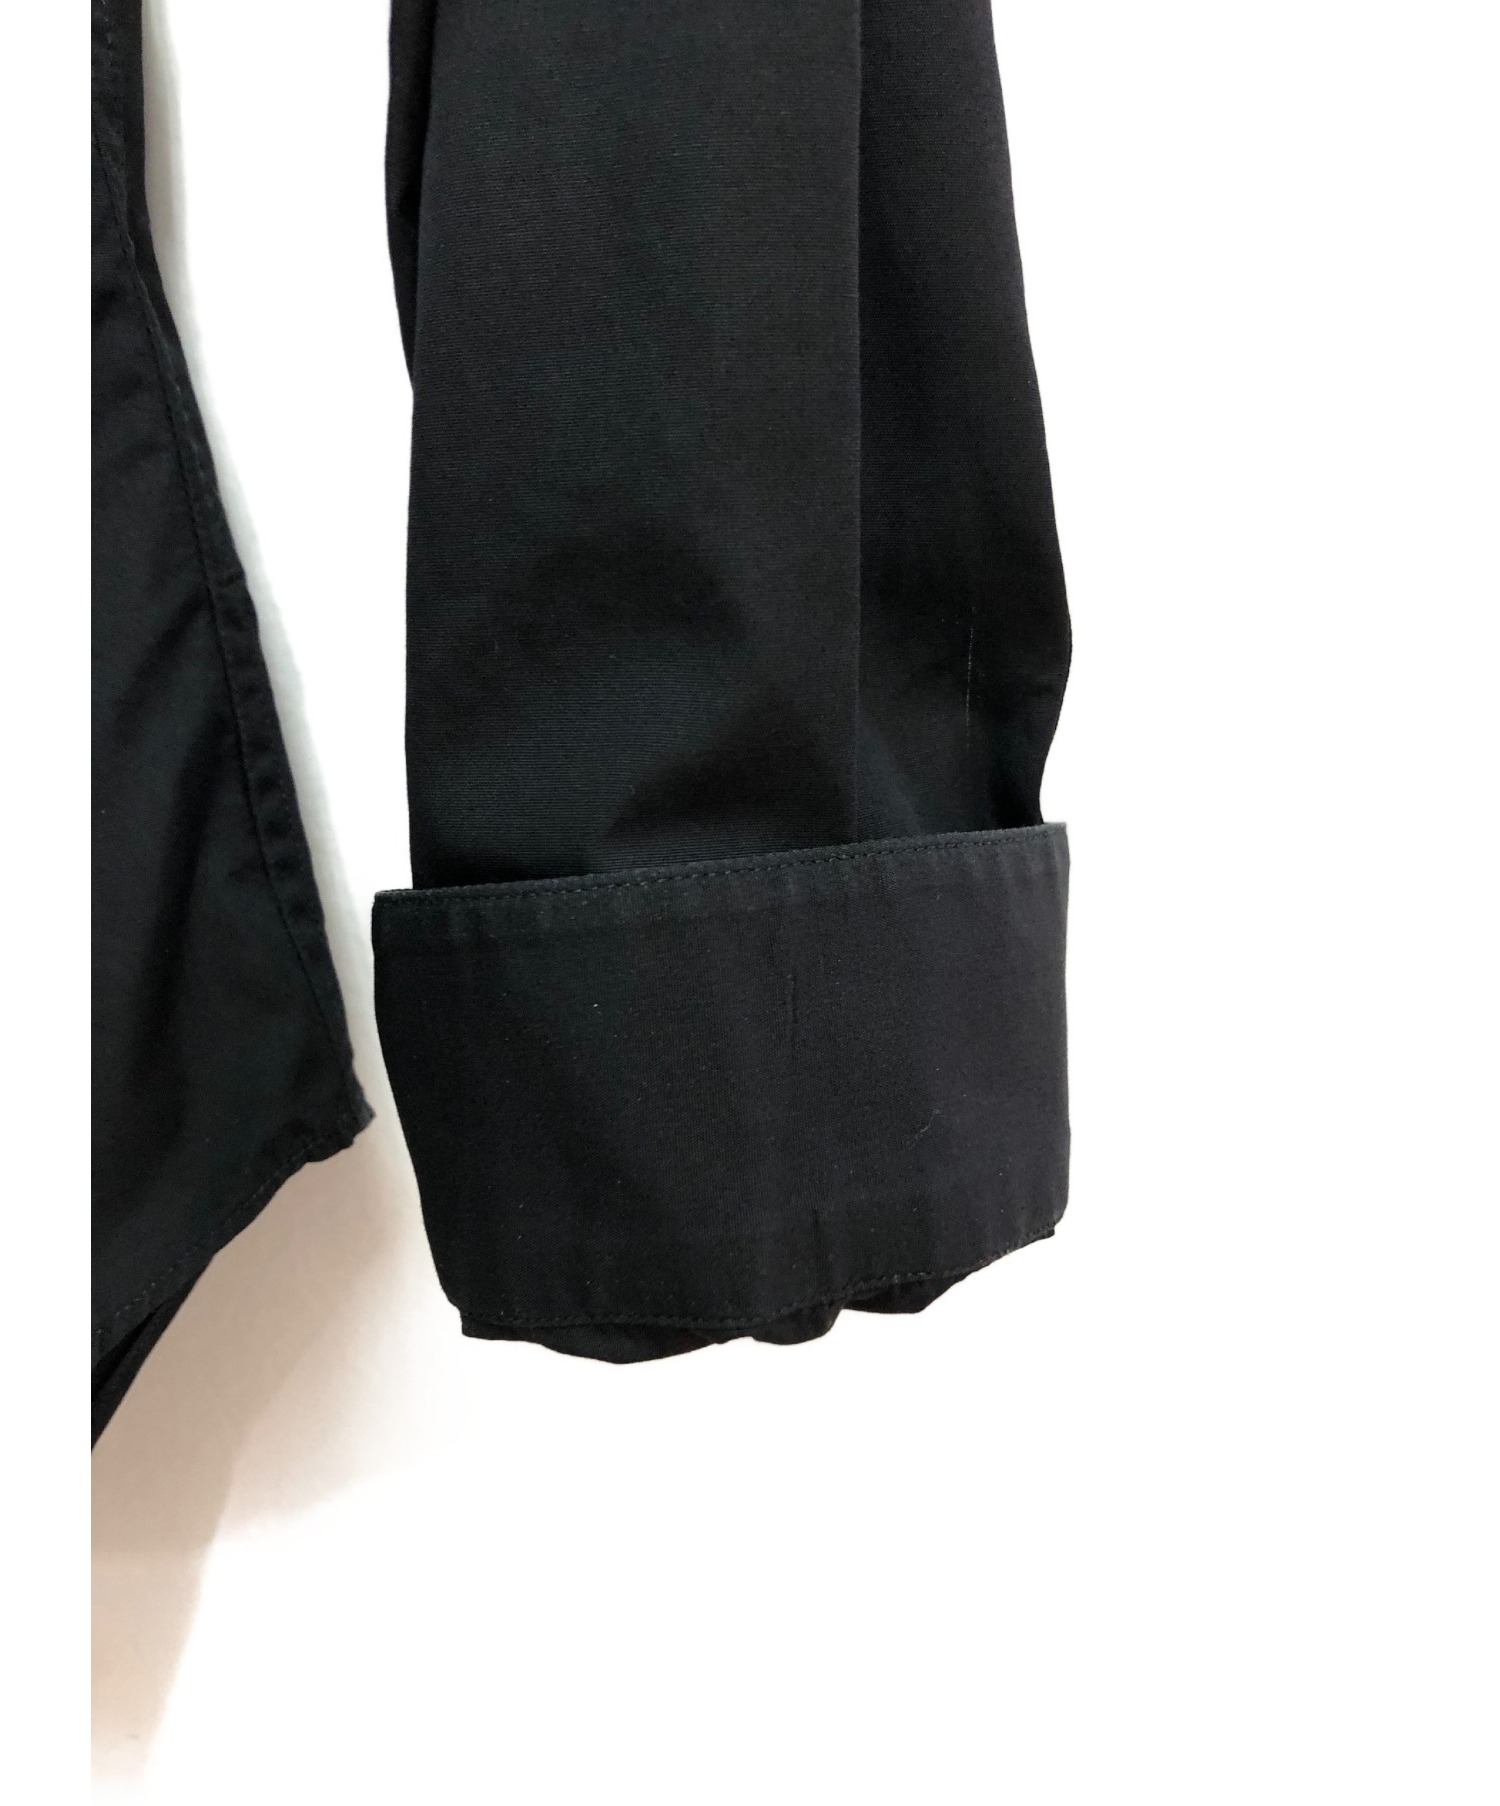 Dior HOMME ディオールオム ブランドロゴNEWAVE半袖Tシャツ ブラック 733J603N8612